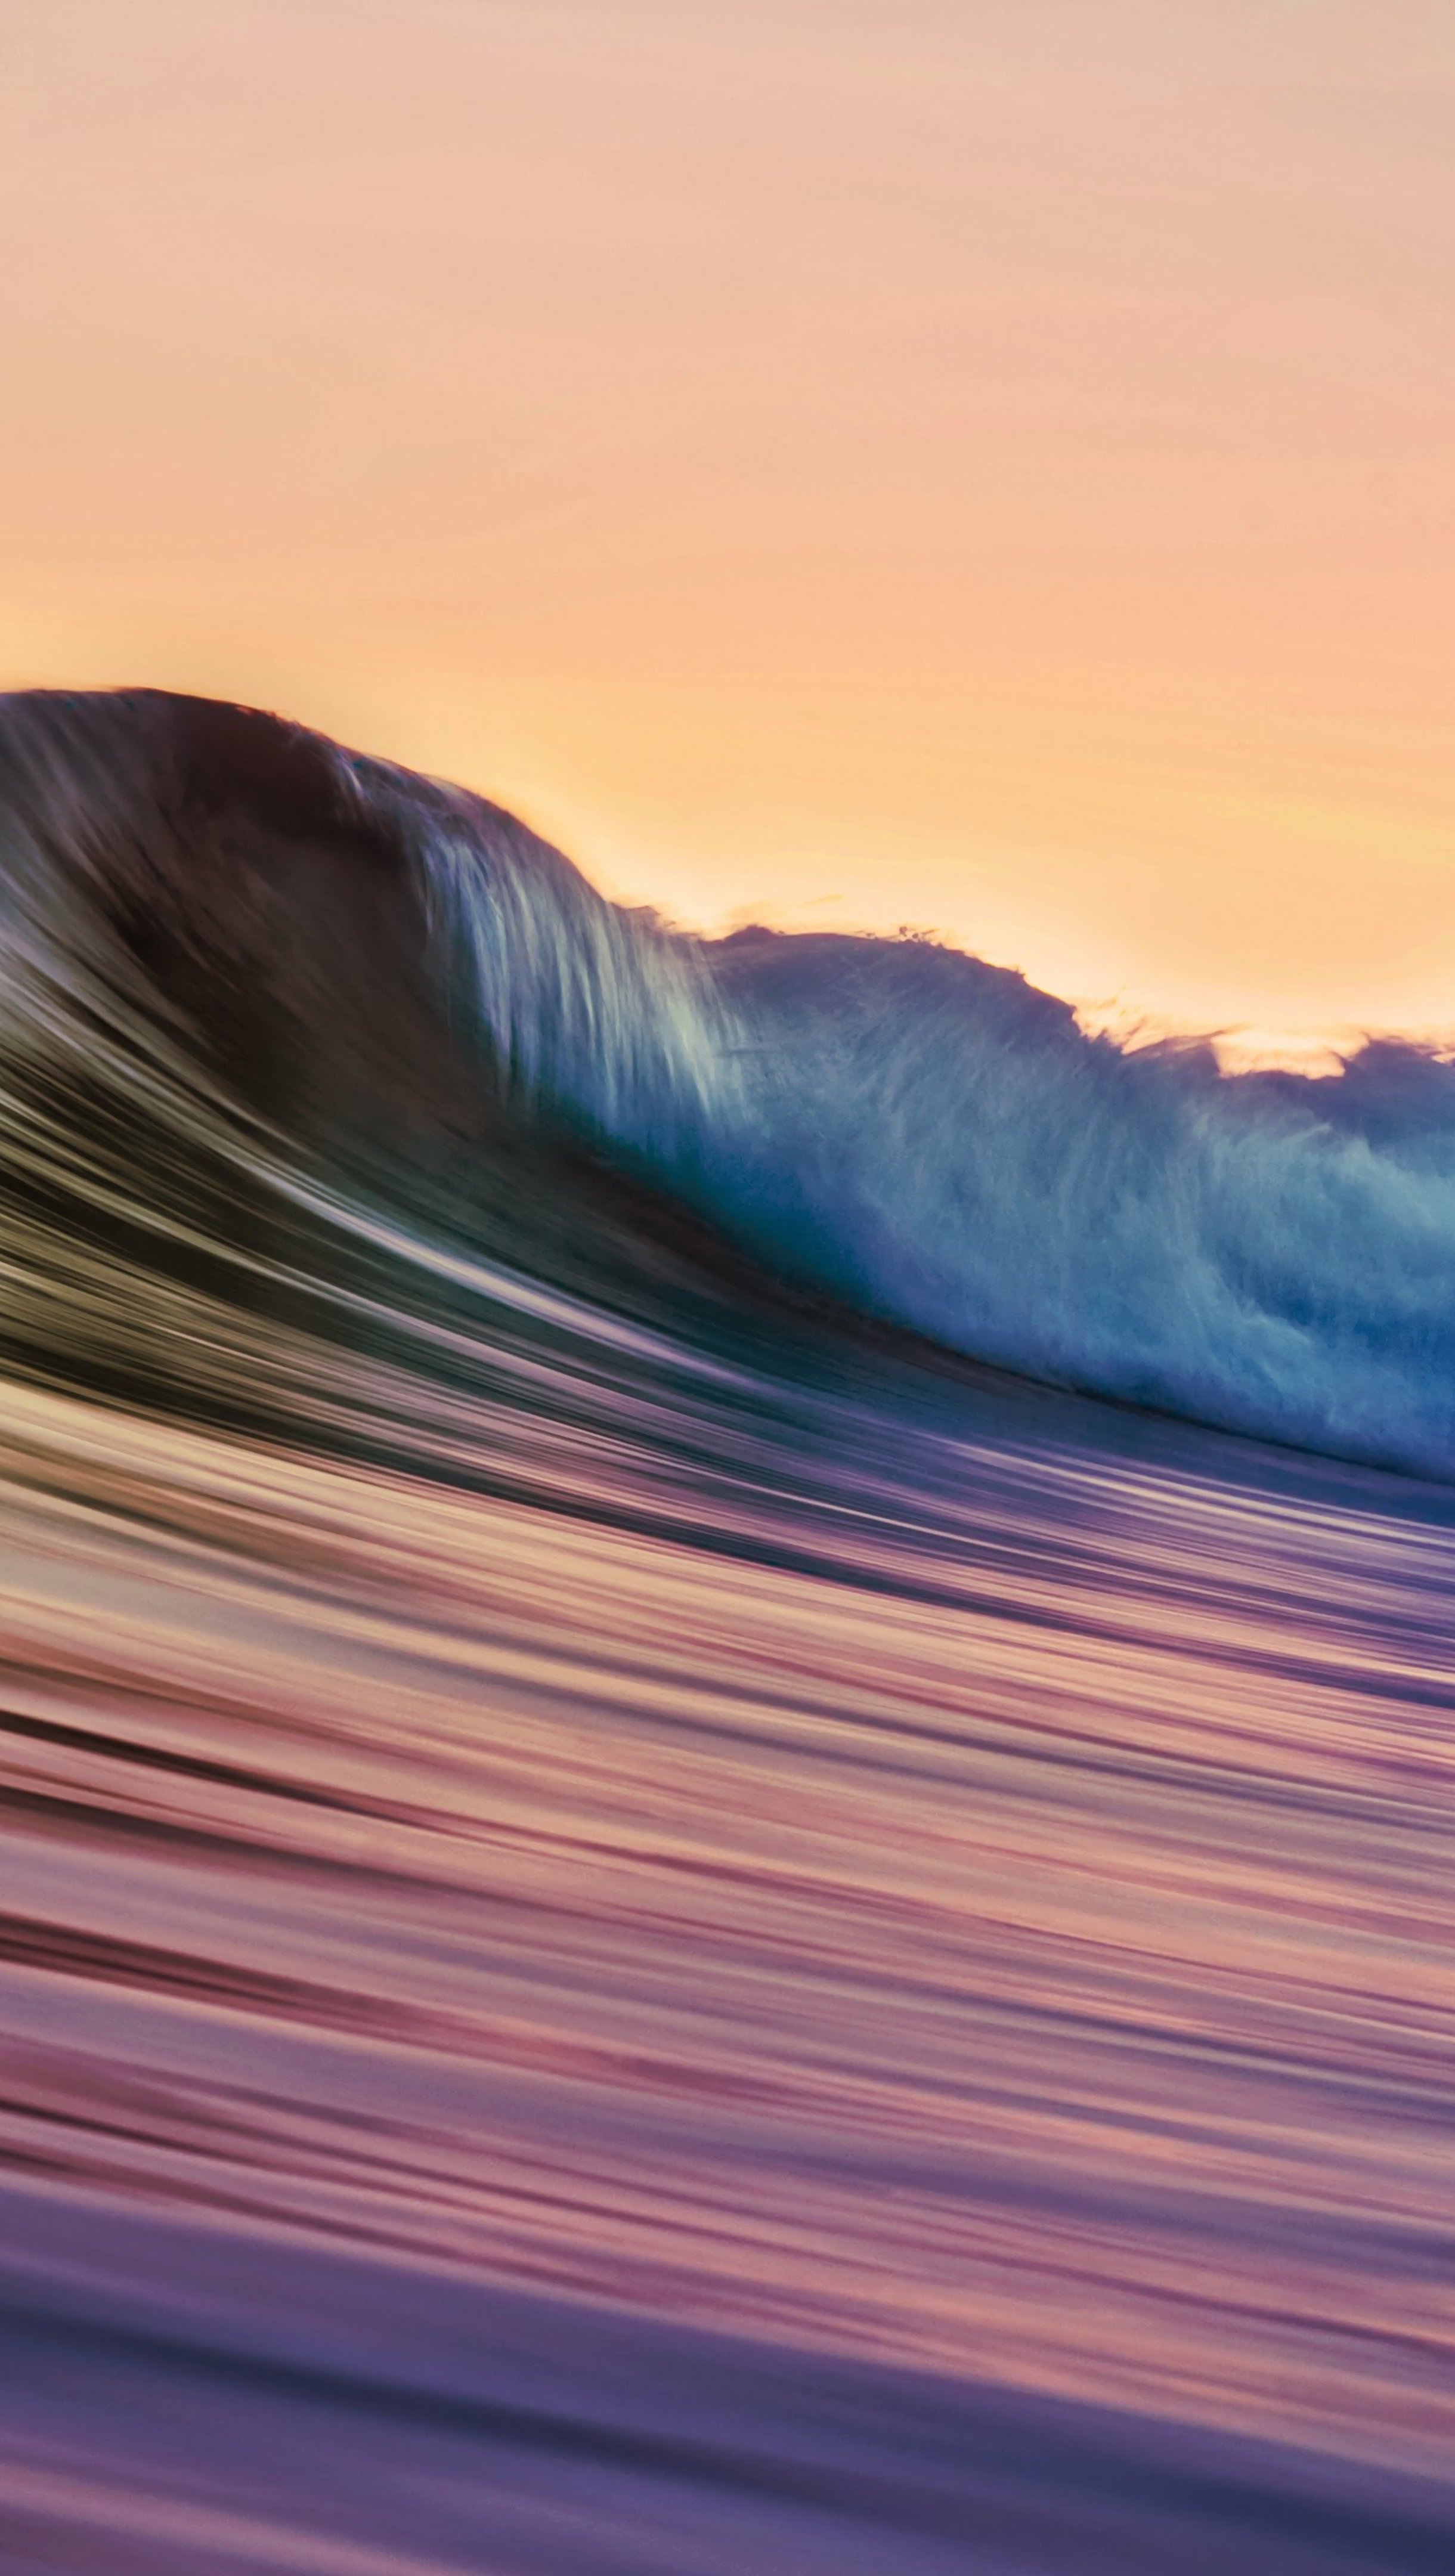 Wave reflecting sunset Wallpaper 8k Ultra HD ID:6977